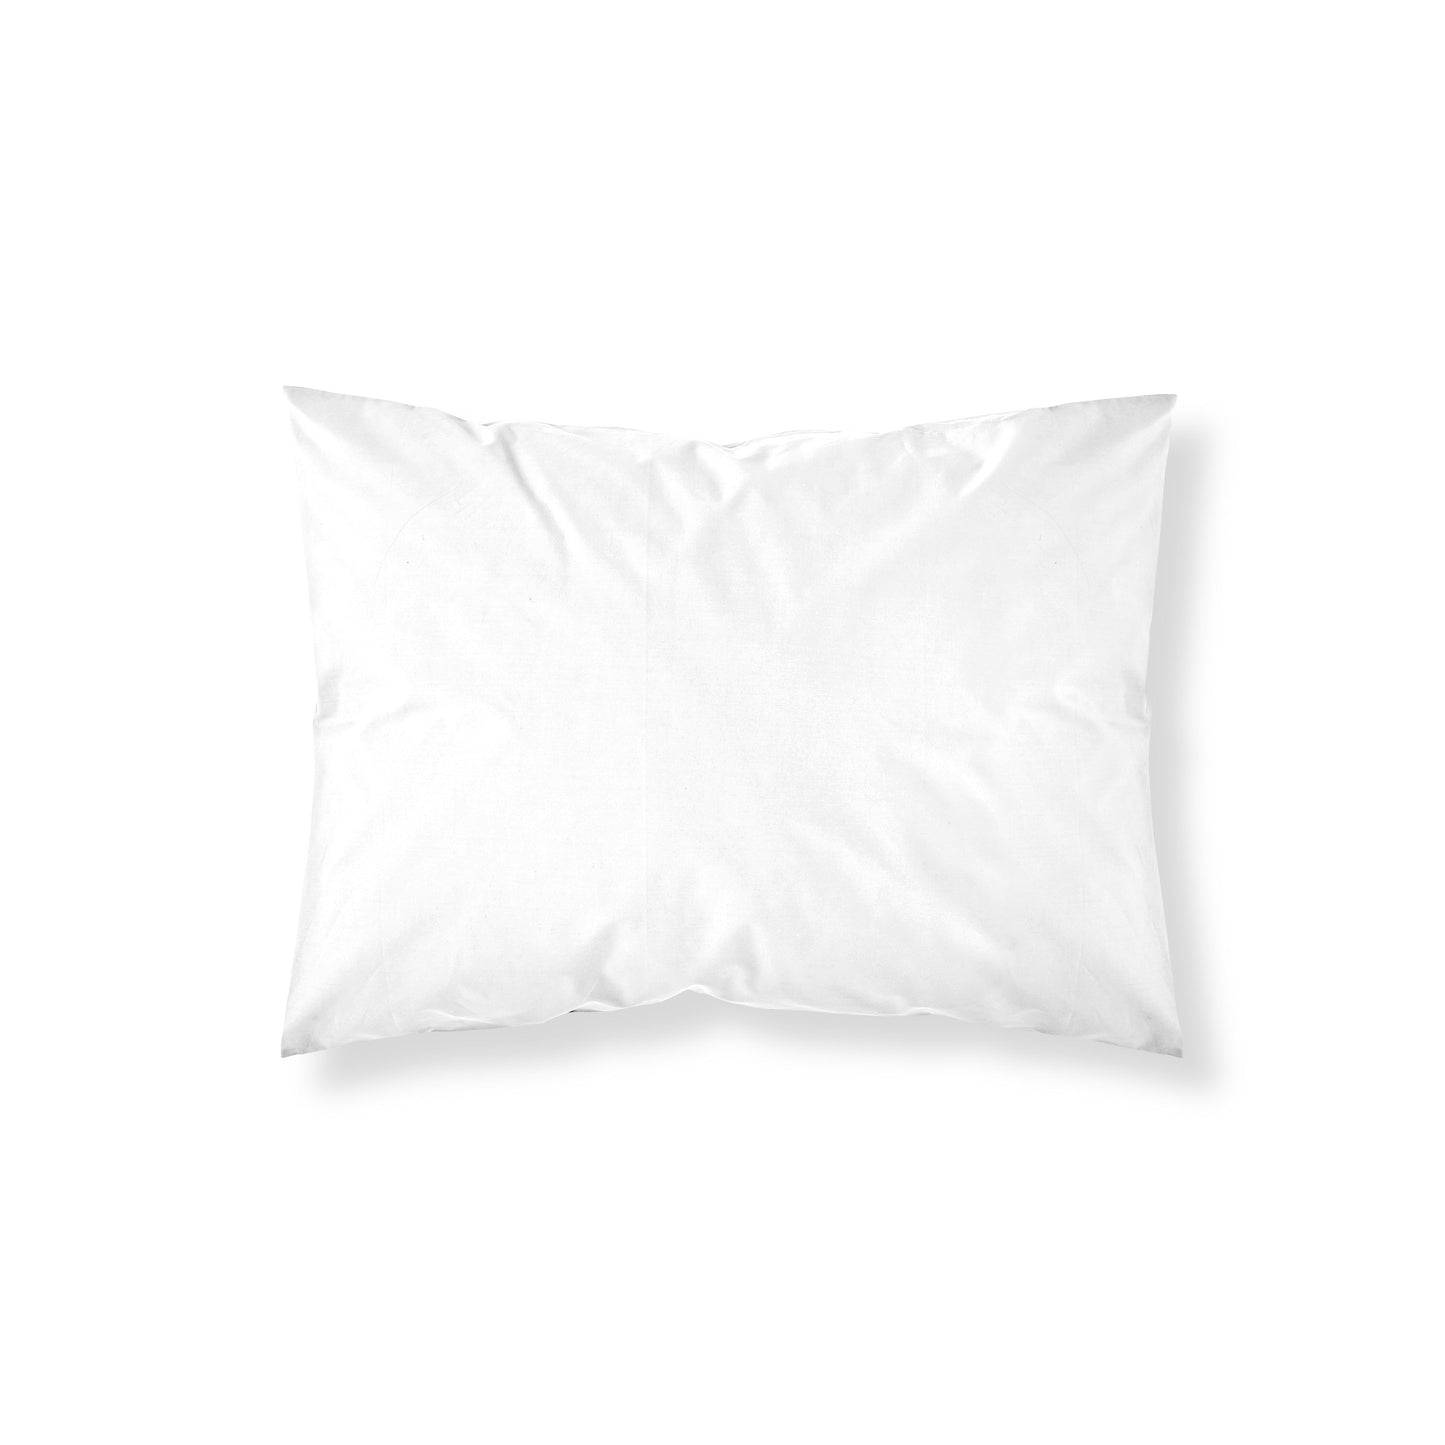 Taie d'oreiller blanche 100% coton 40x60 cm